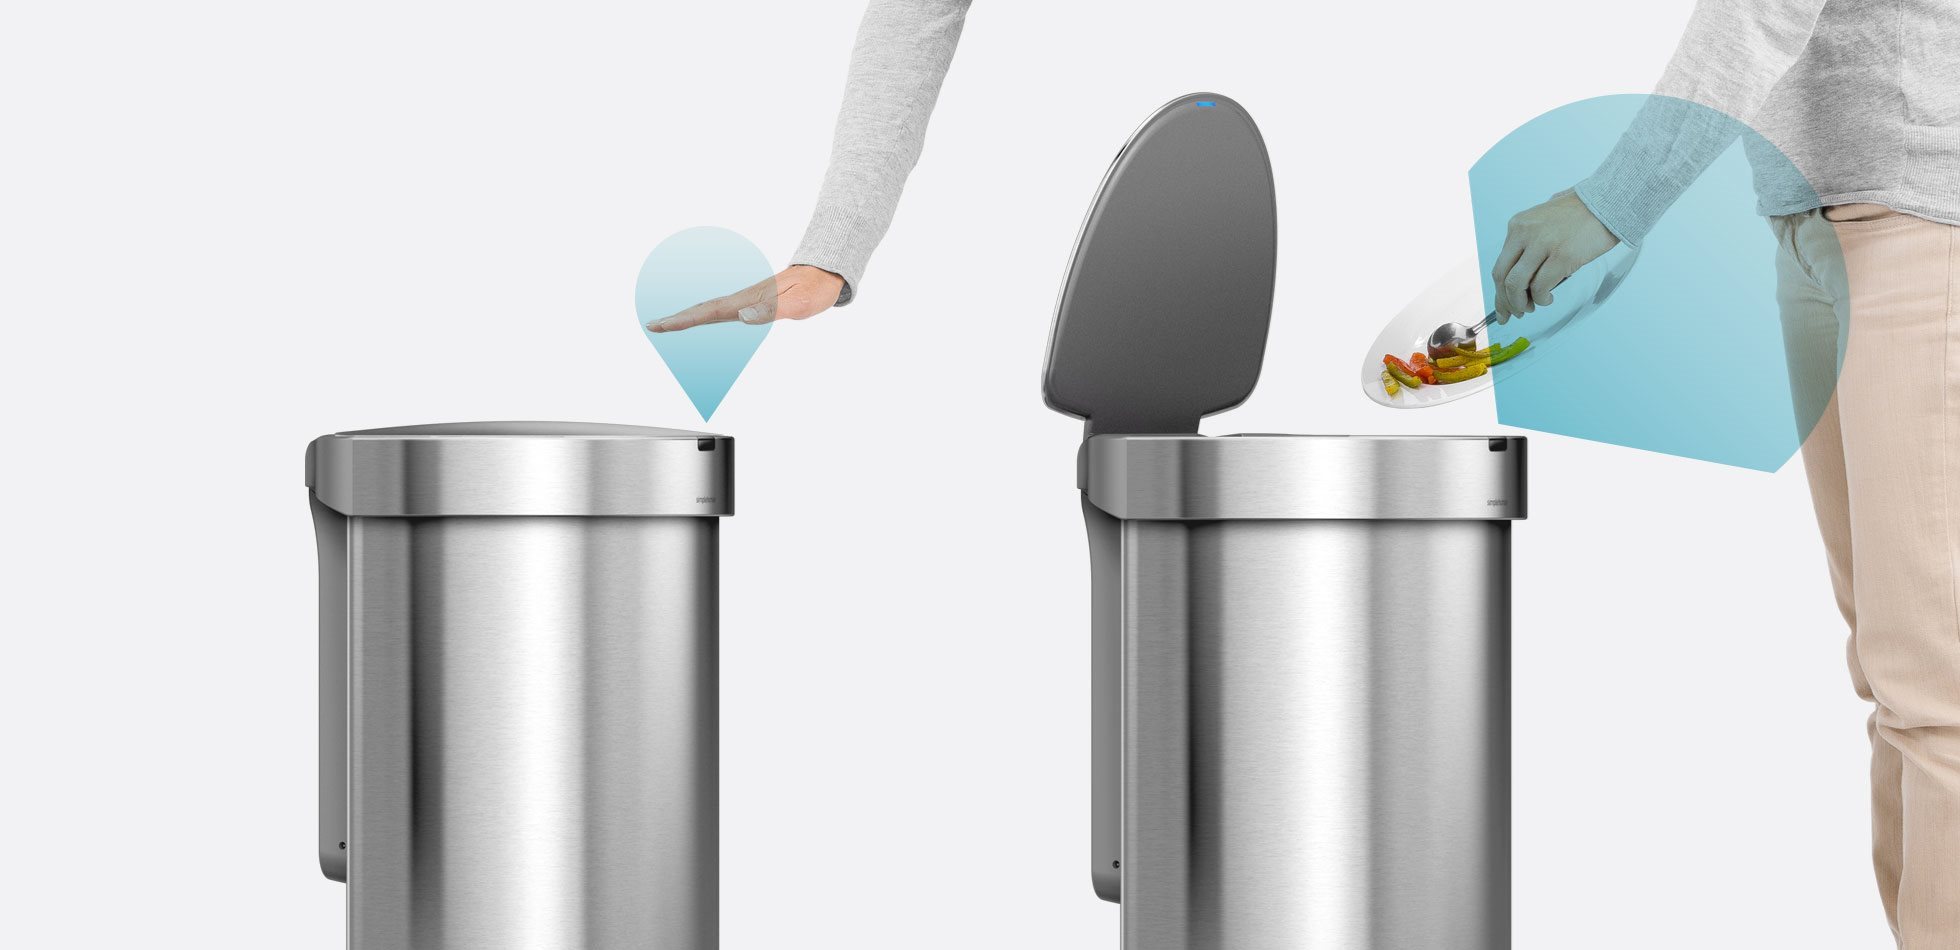  simplehuman Semi-Round Automatic Sensor Trash Can